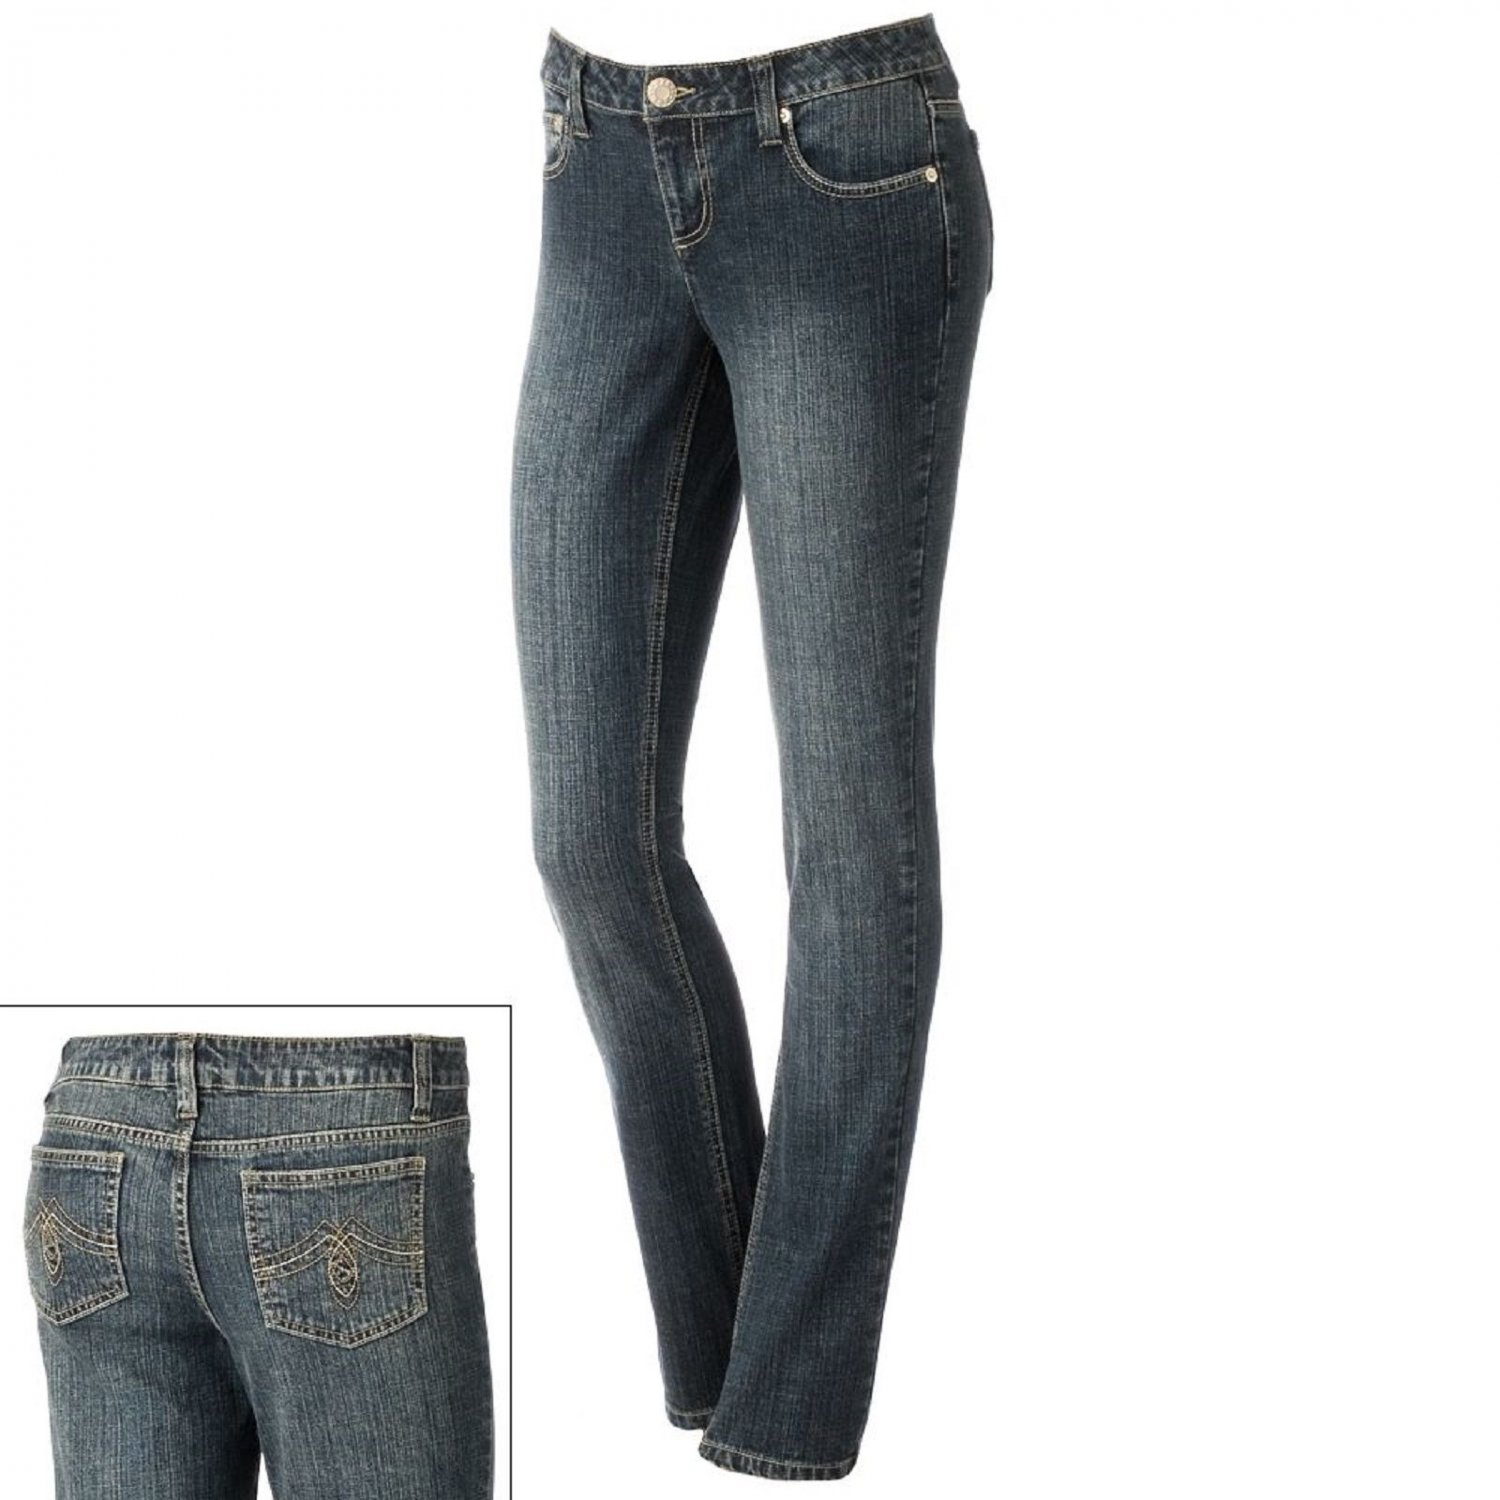 SO Juniors size 0 Basic Skinny Jeans Beta Blue New